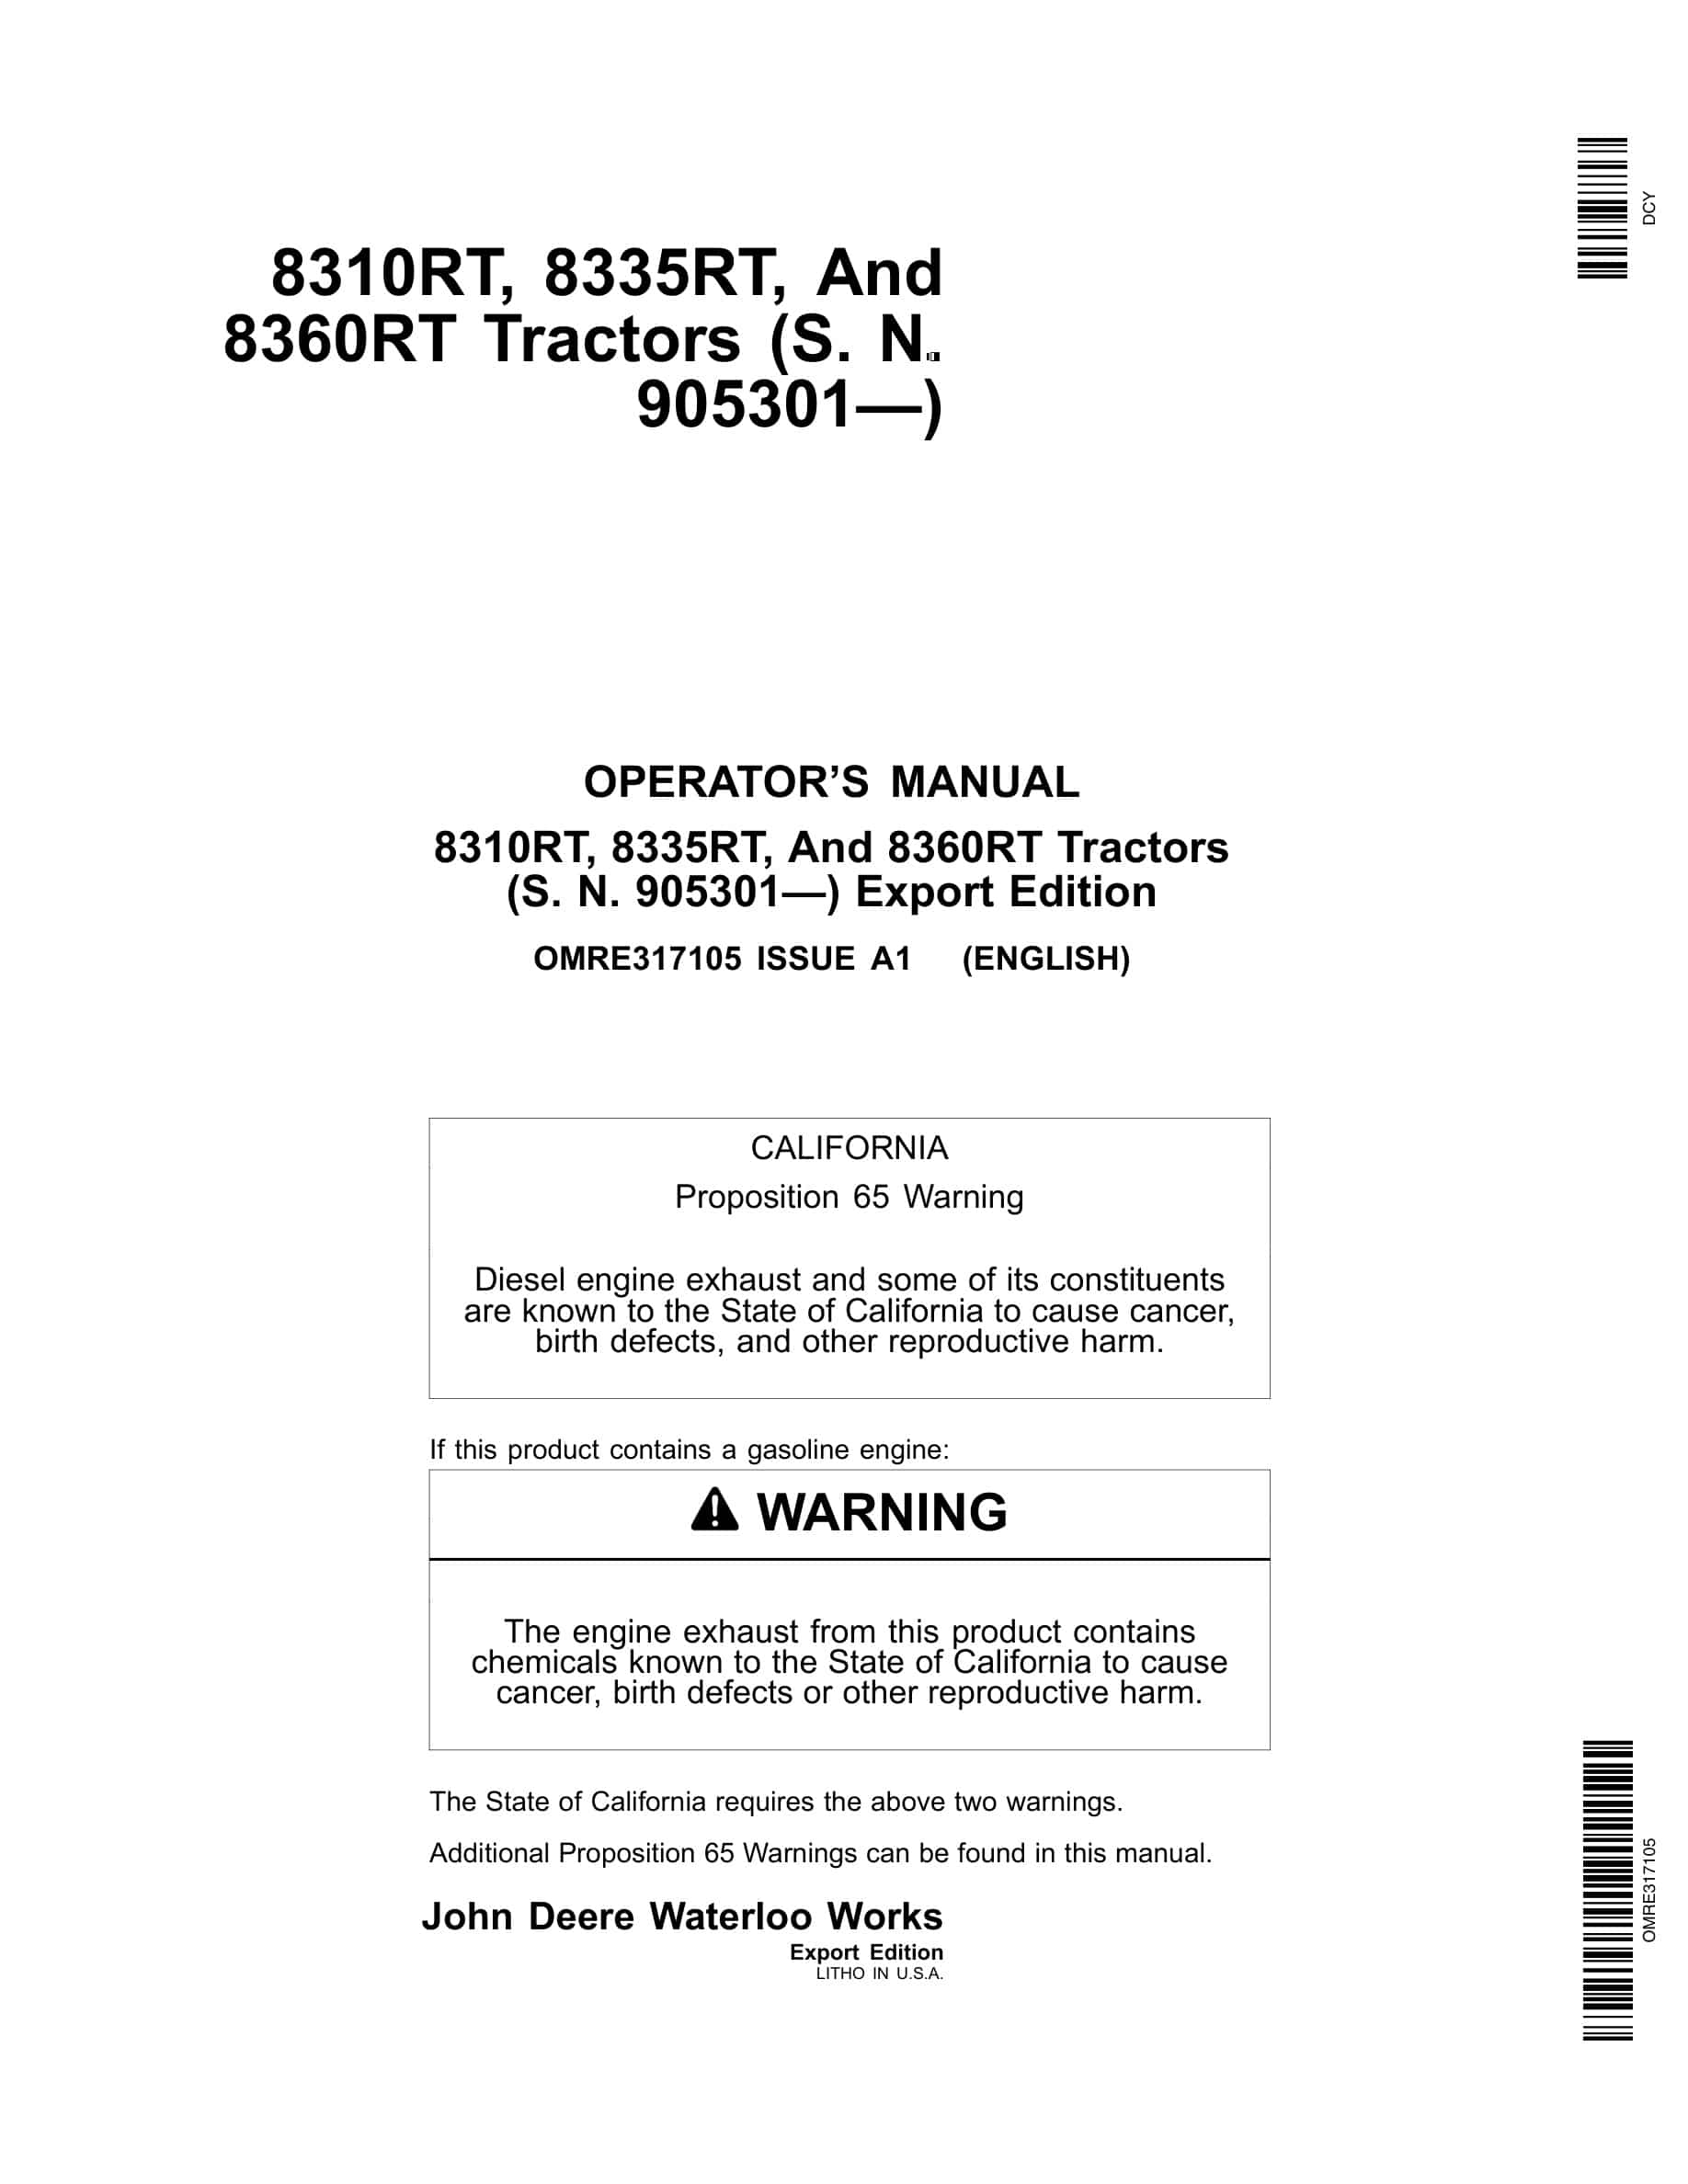 John Deere 8310rt, 8335rt, And 8360rt Tractors Operator Manuals OMRE317105-1